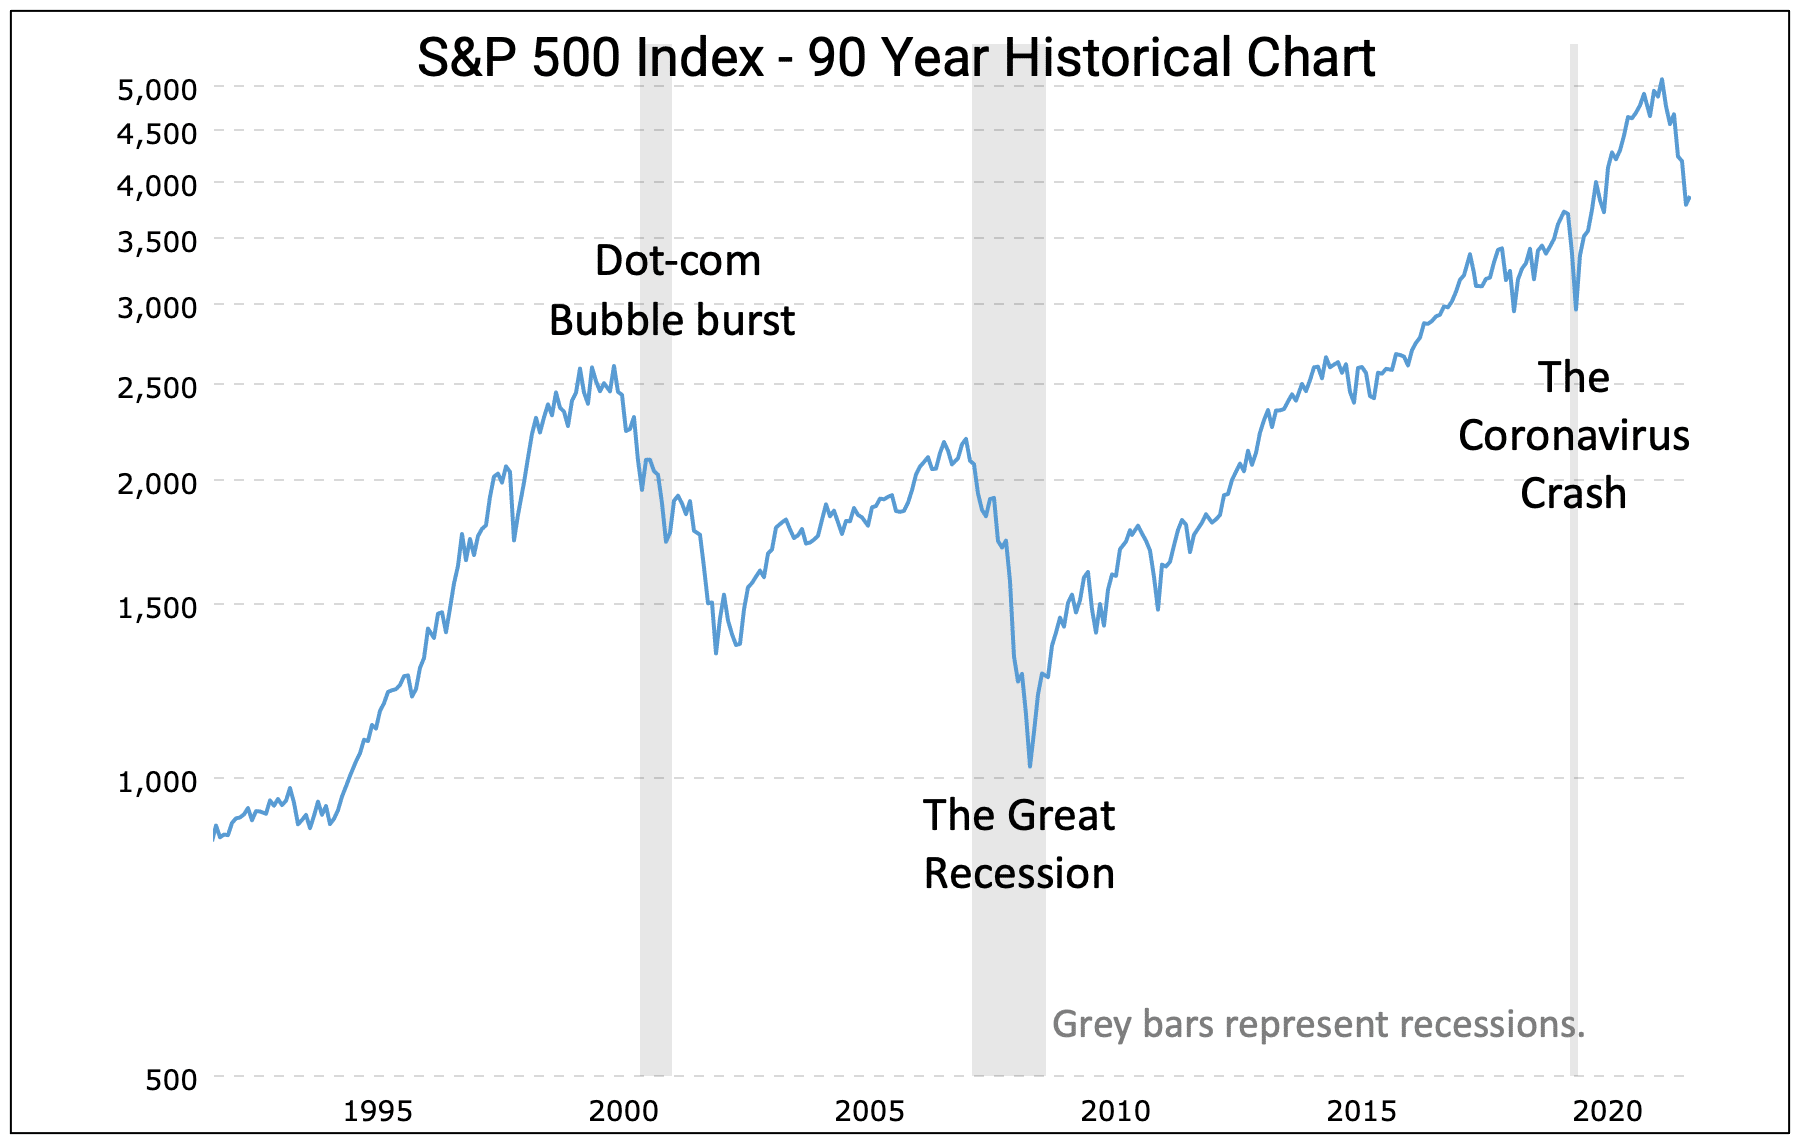 Market volatility across 90 years of history